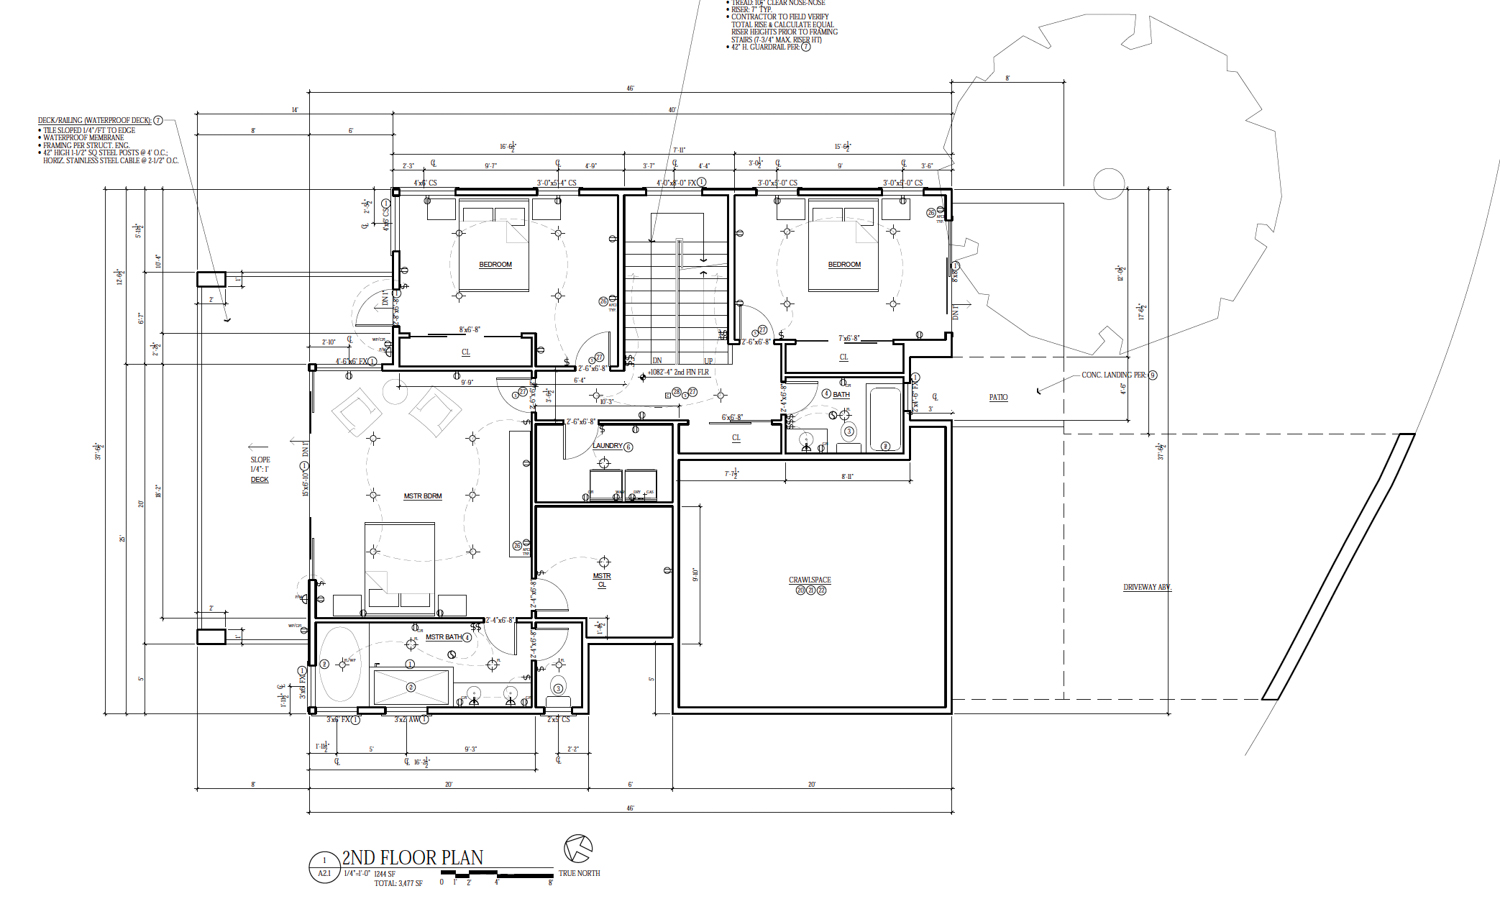 6381 Girvin Drive second-level floor plan, elevation by John Newton